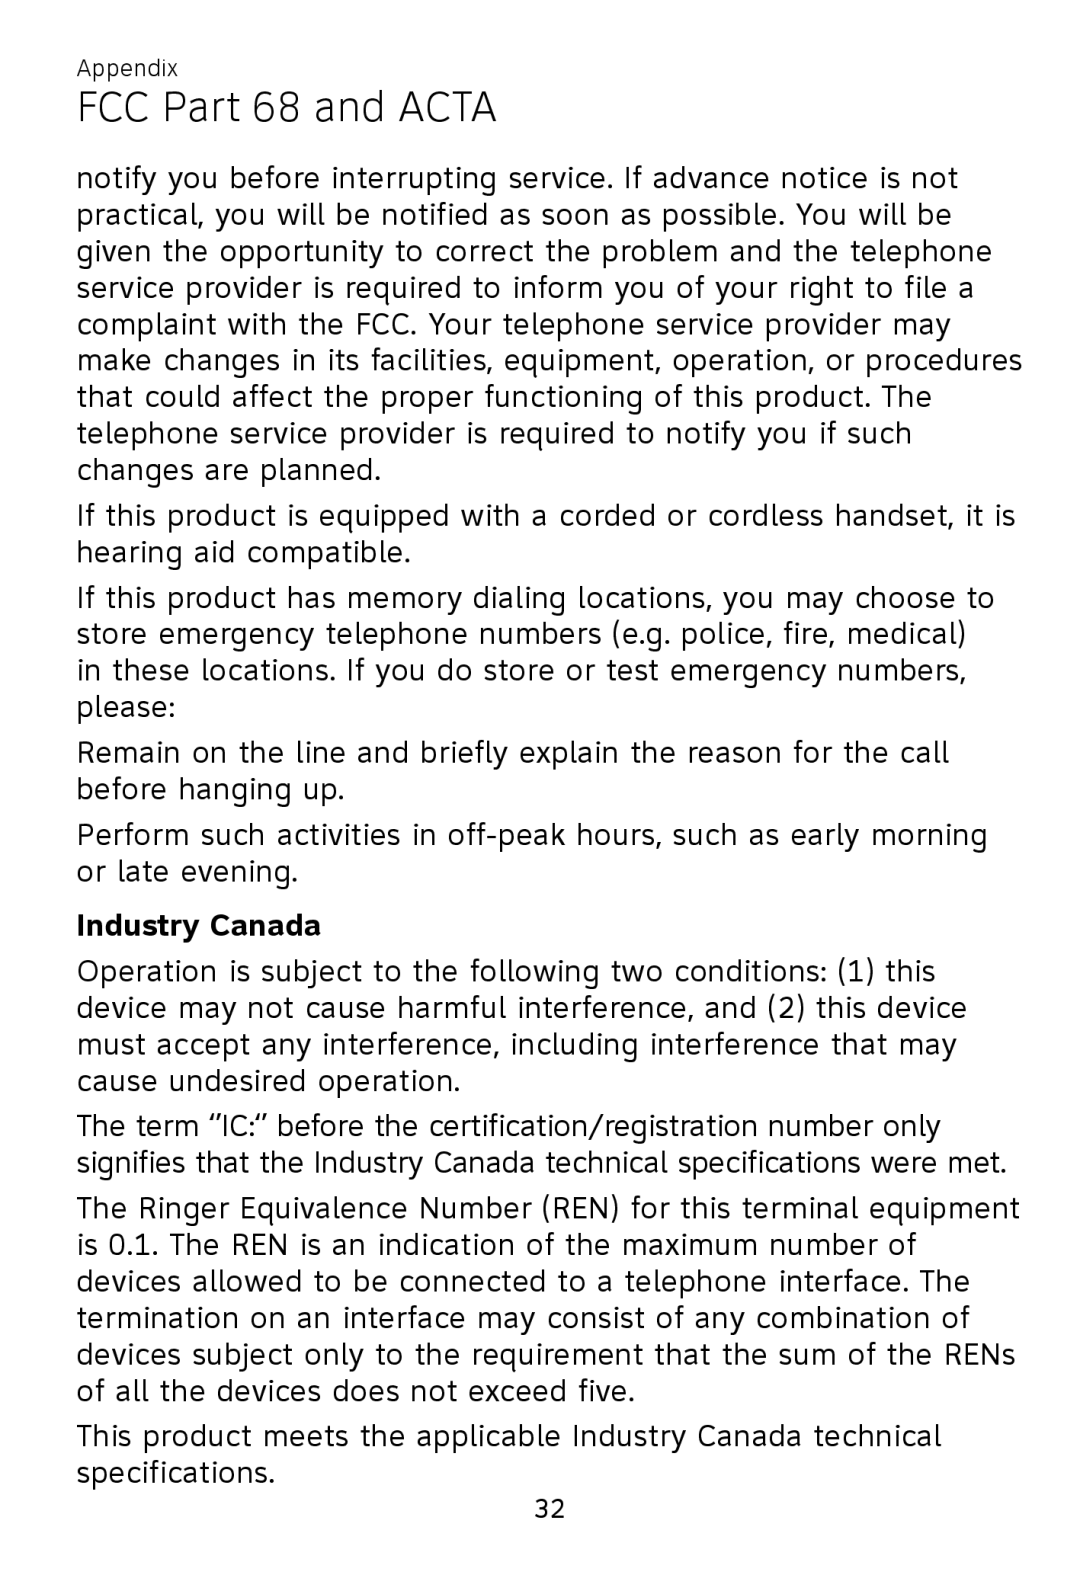 AT&T TL7700 user manual Industry Canada, FCC Part 68 and ACTA 